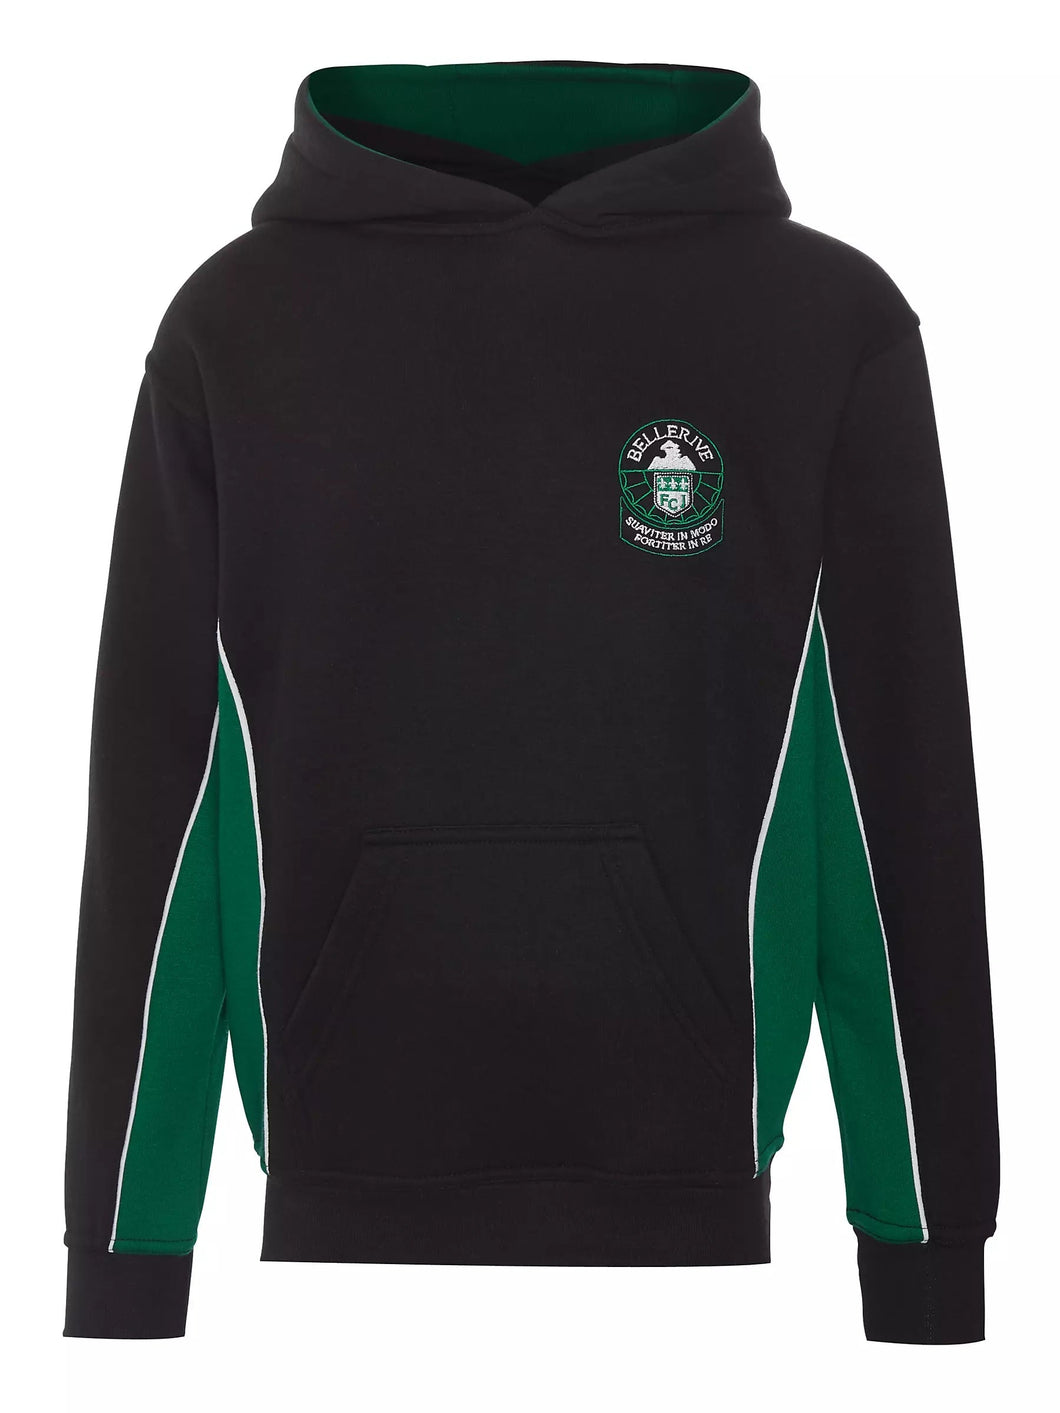 Bellerive Black & Green Hooded Sweatshirt (NEW)